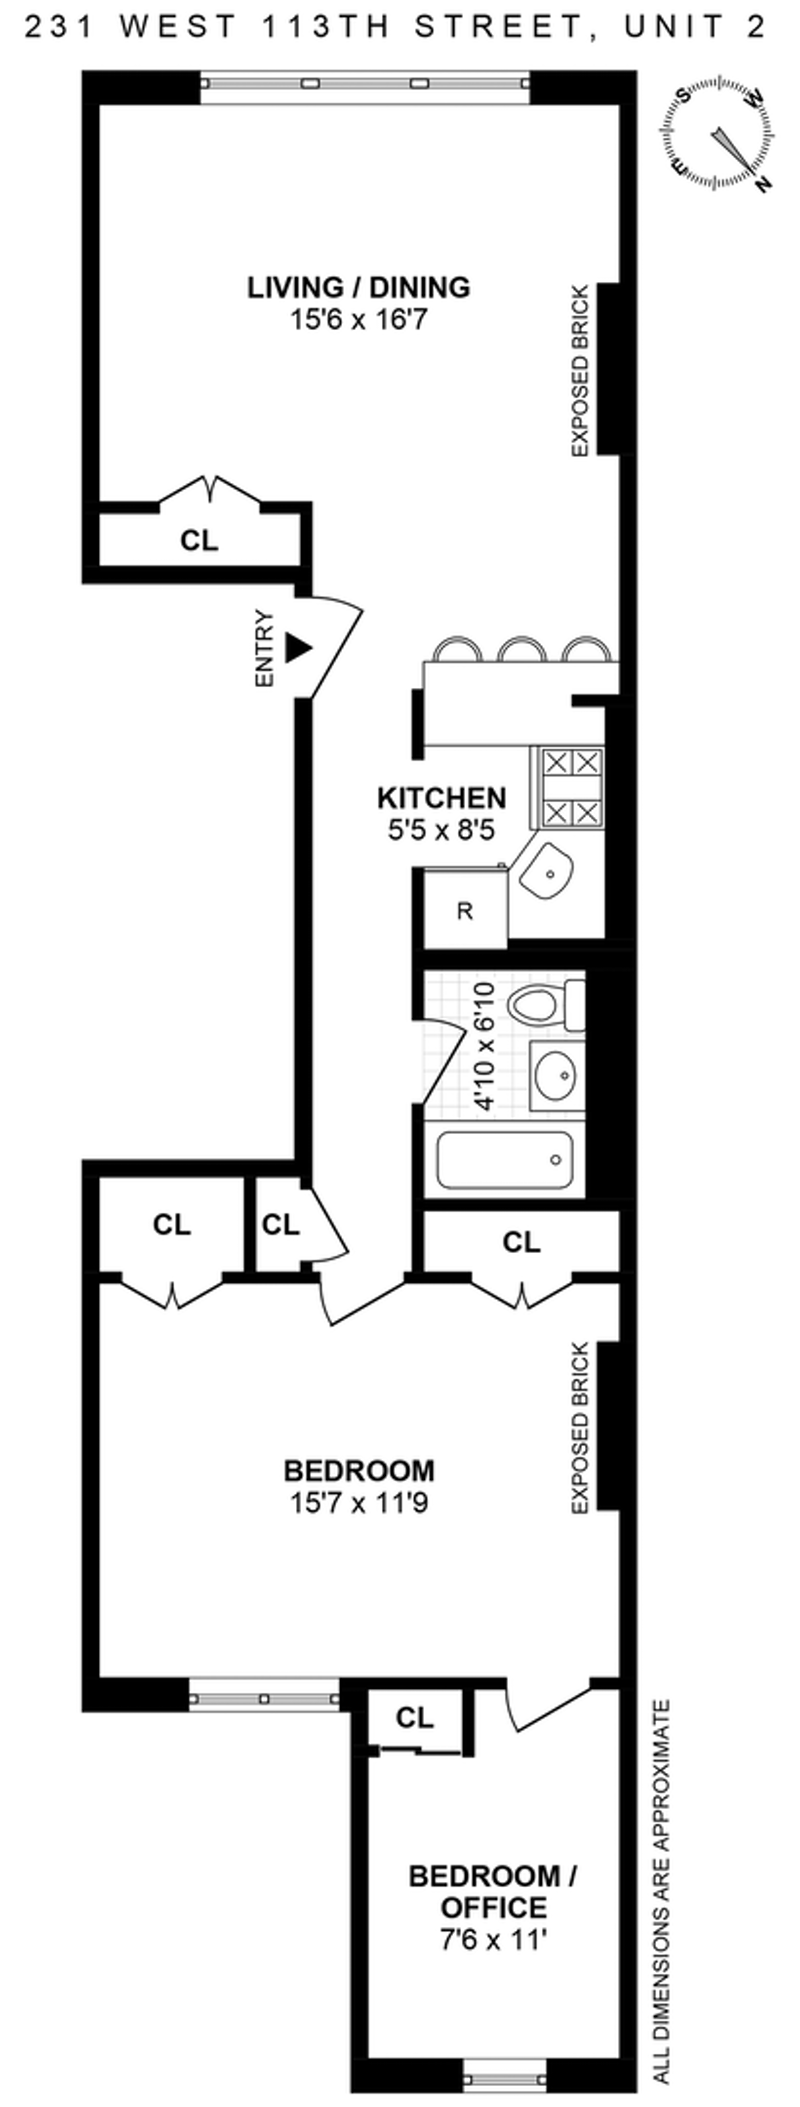 Floorplan for 231 West 113th Street